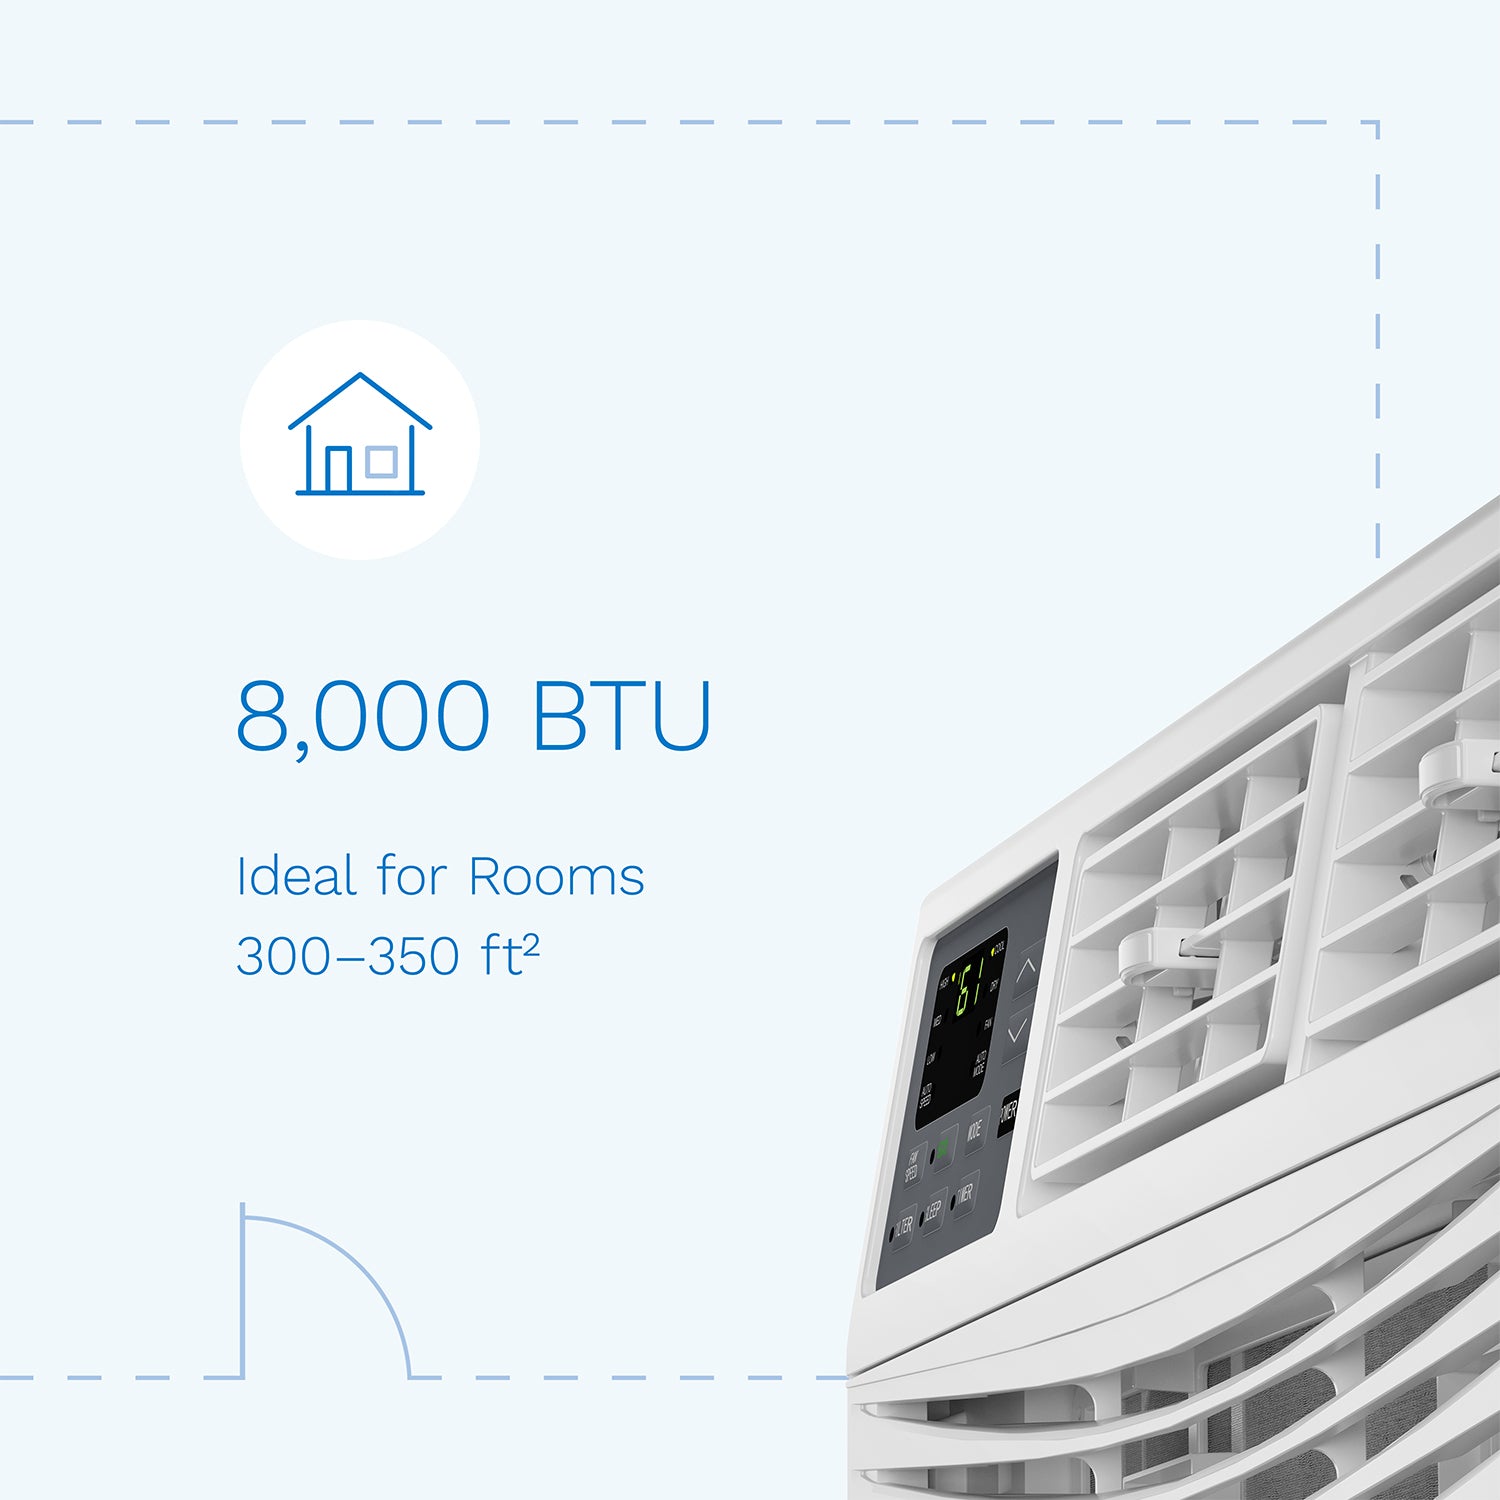 Window Air Conditioner - 8,000 BTU